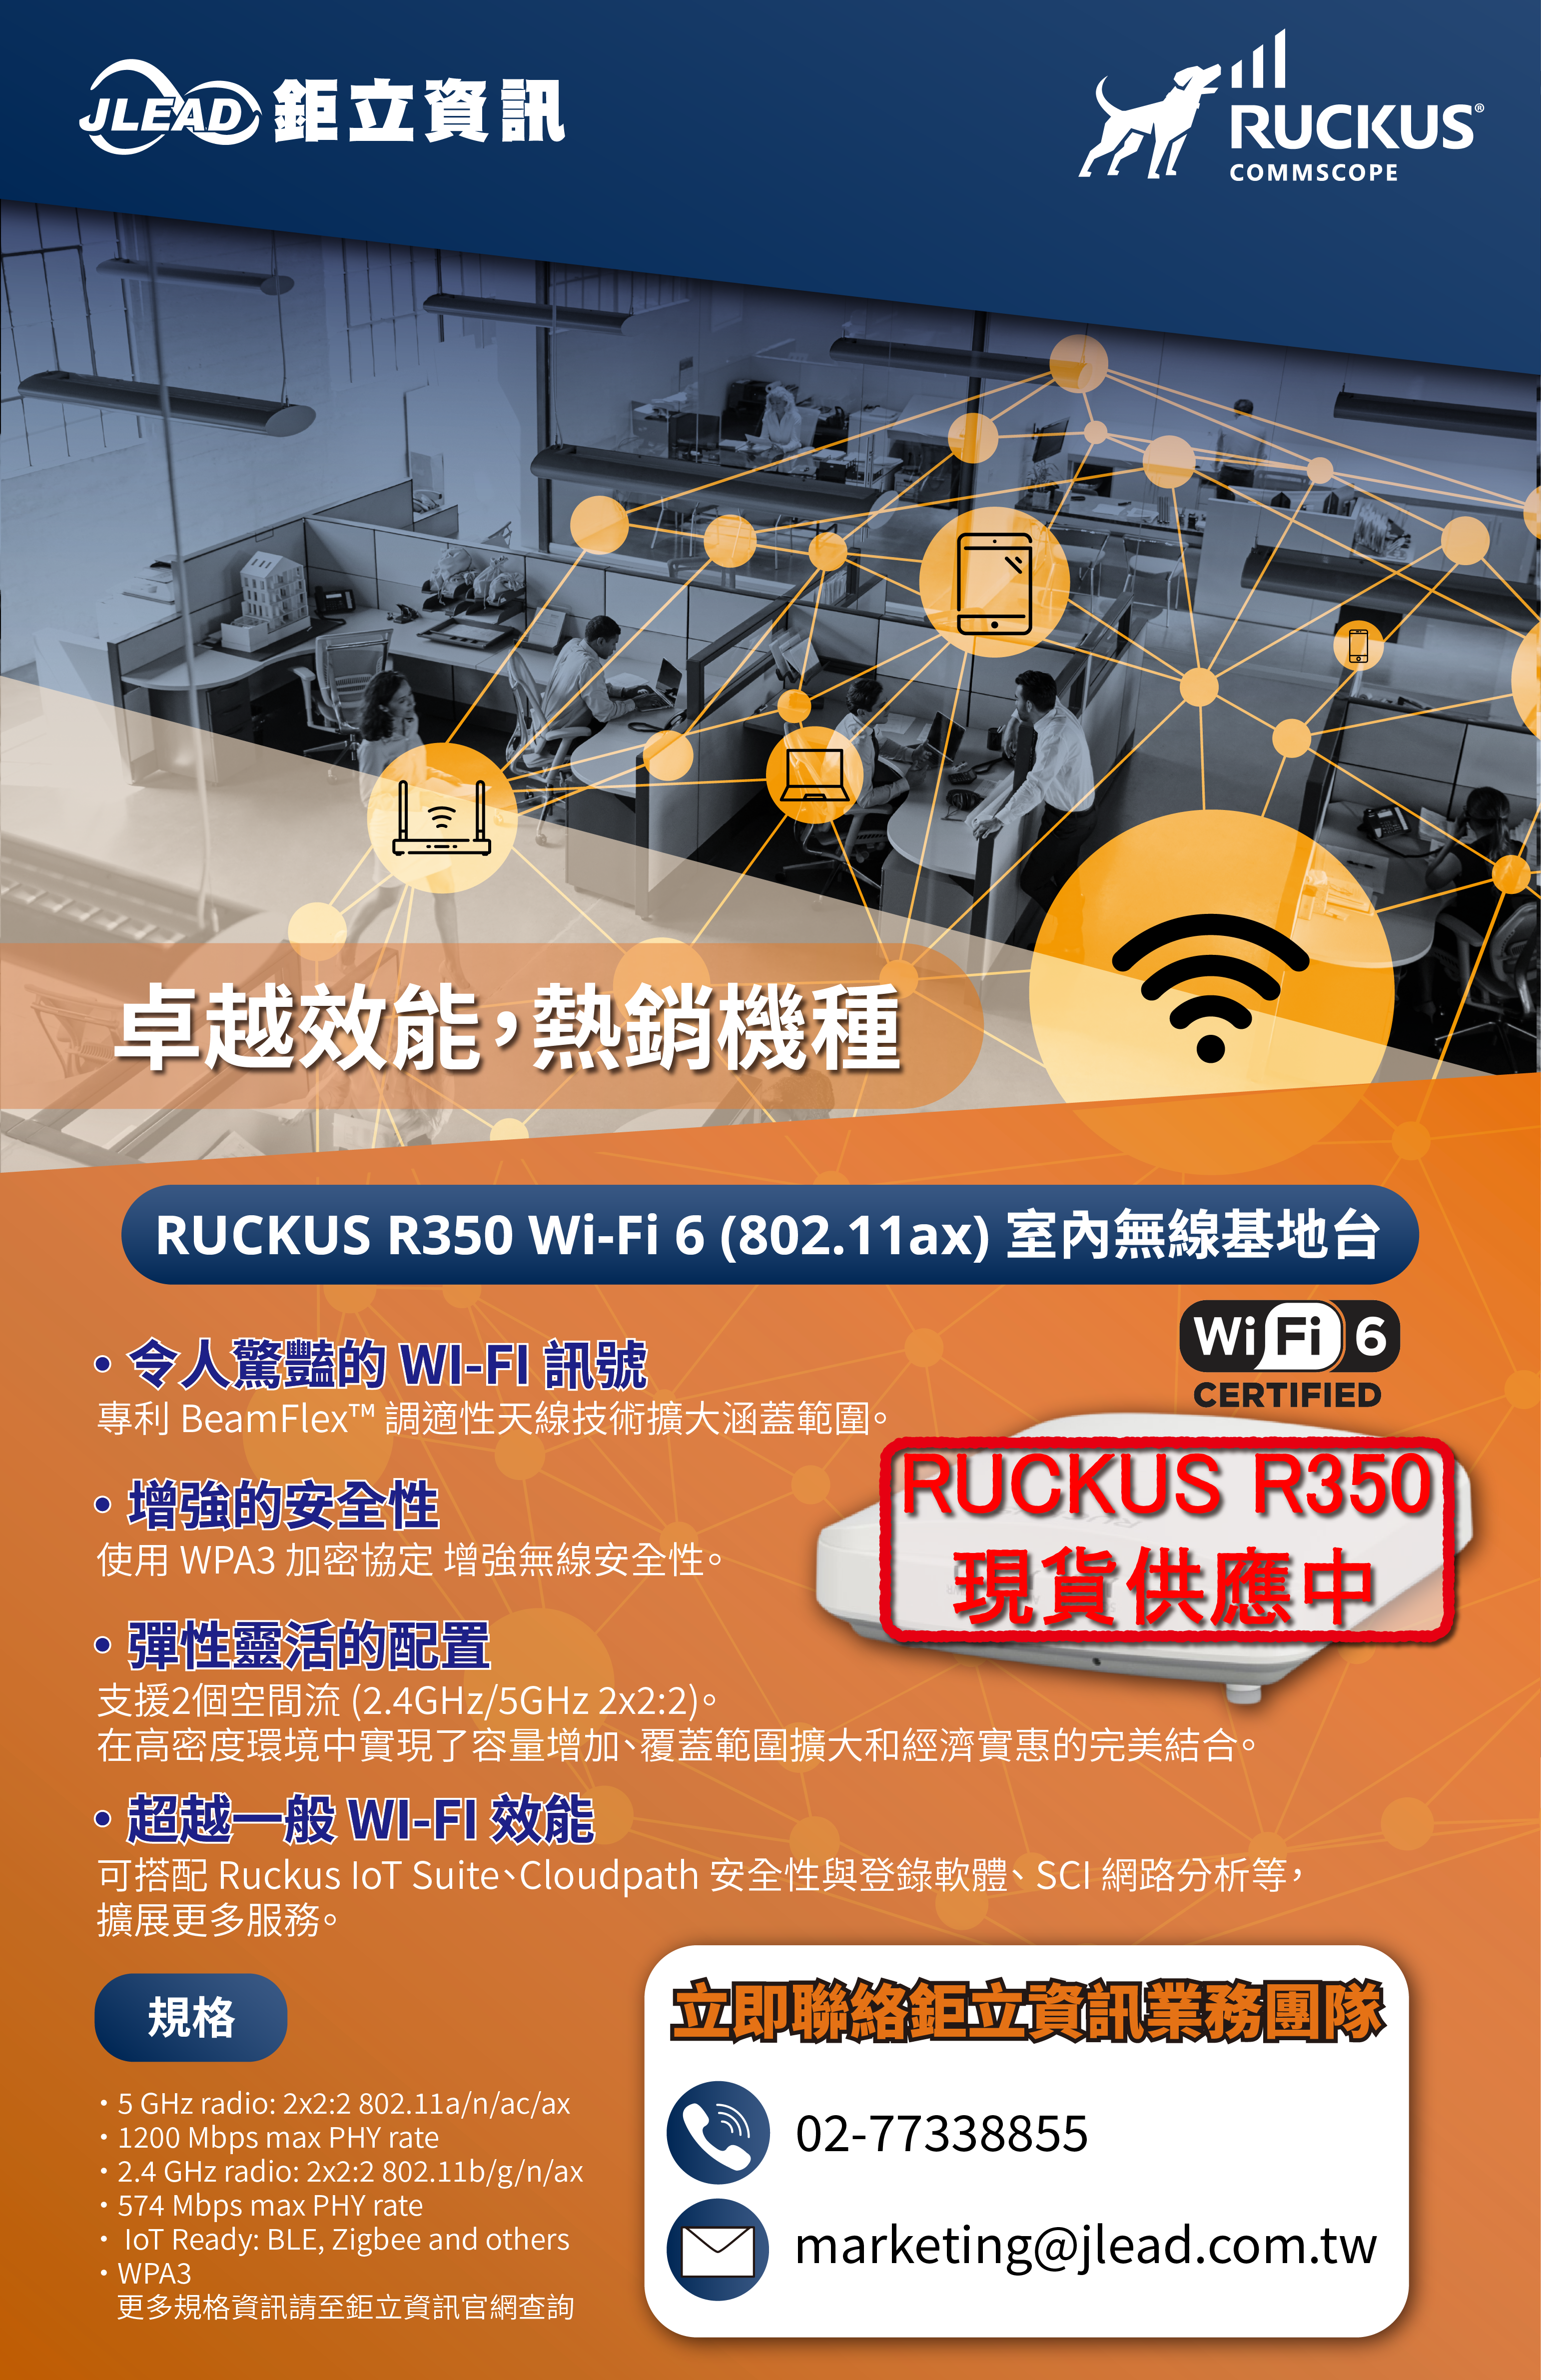 Ruckus R350 promotion EDM